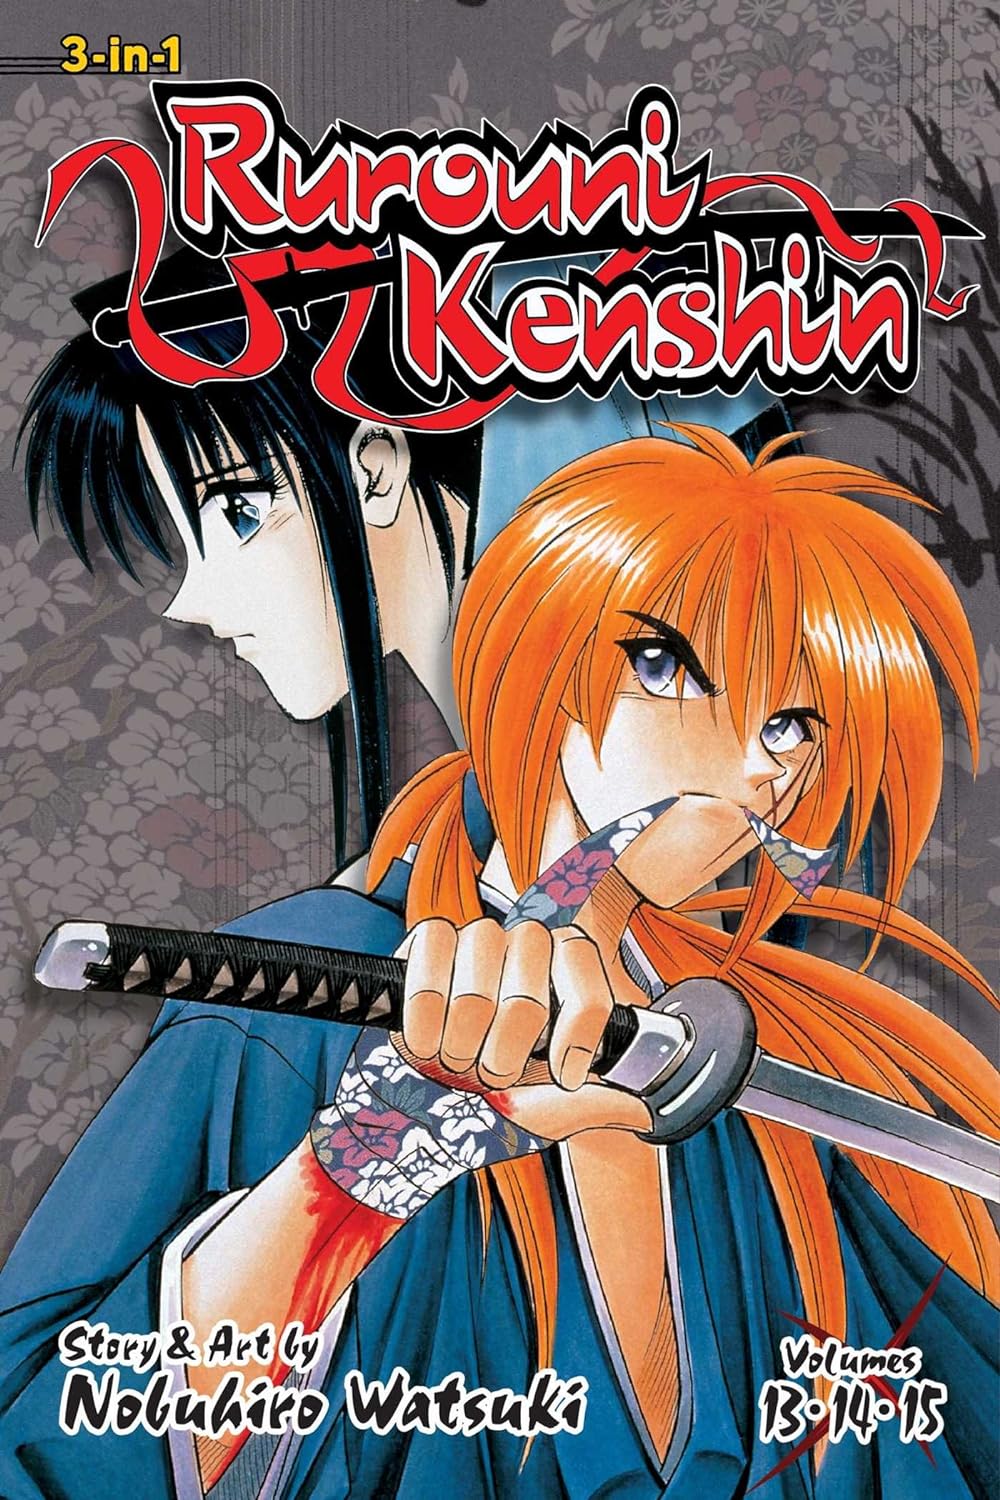 Rurouni Kenshin Volume 13-15 (3-in-1 Edition)